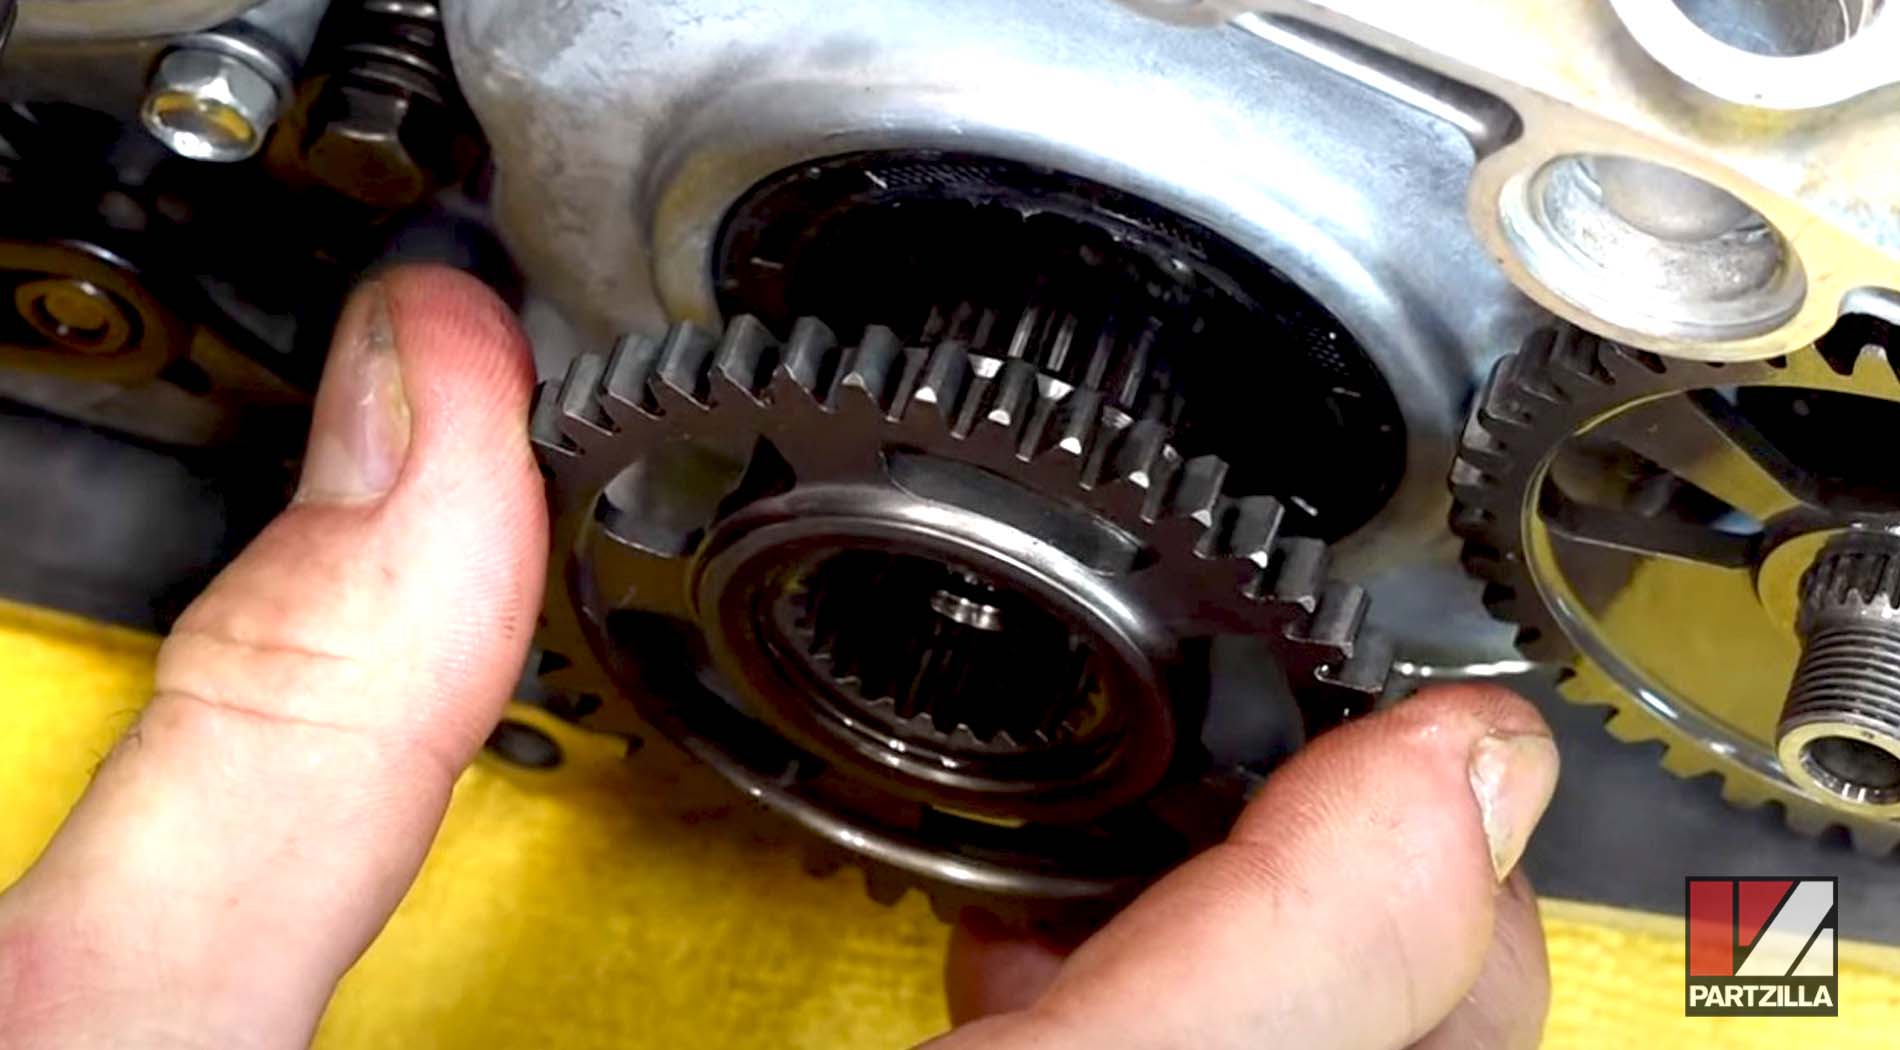 Honda CRF450 engine rebuild secondary drive gear